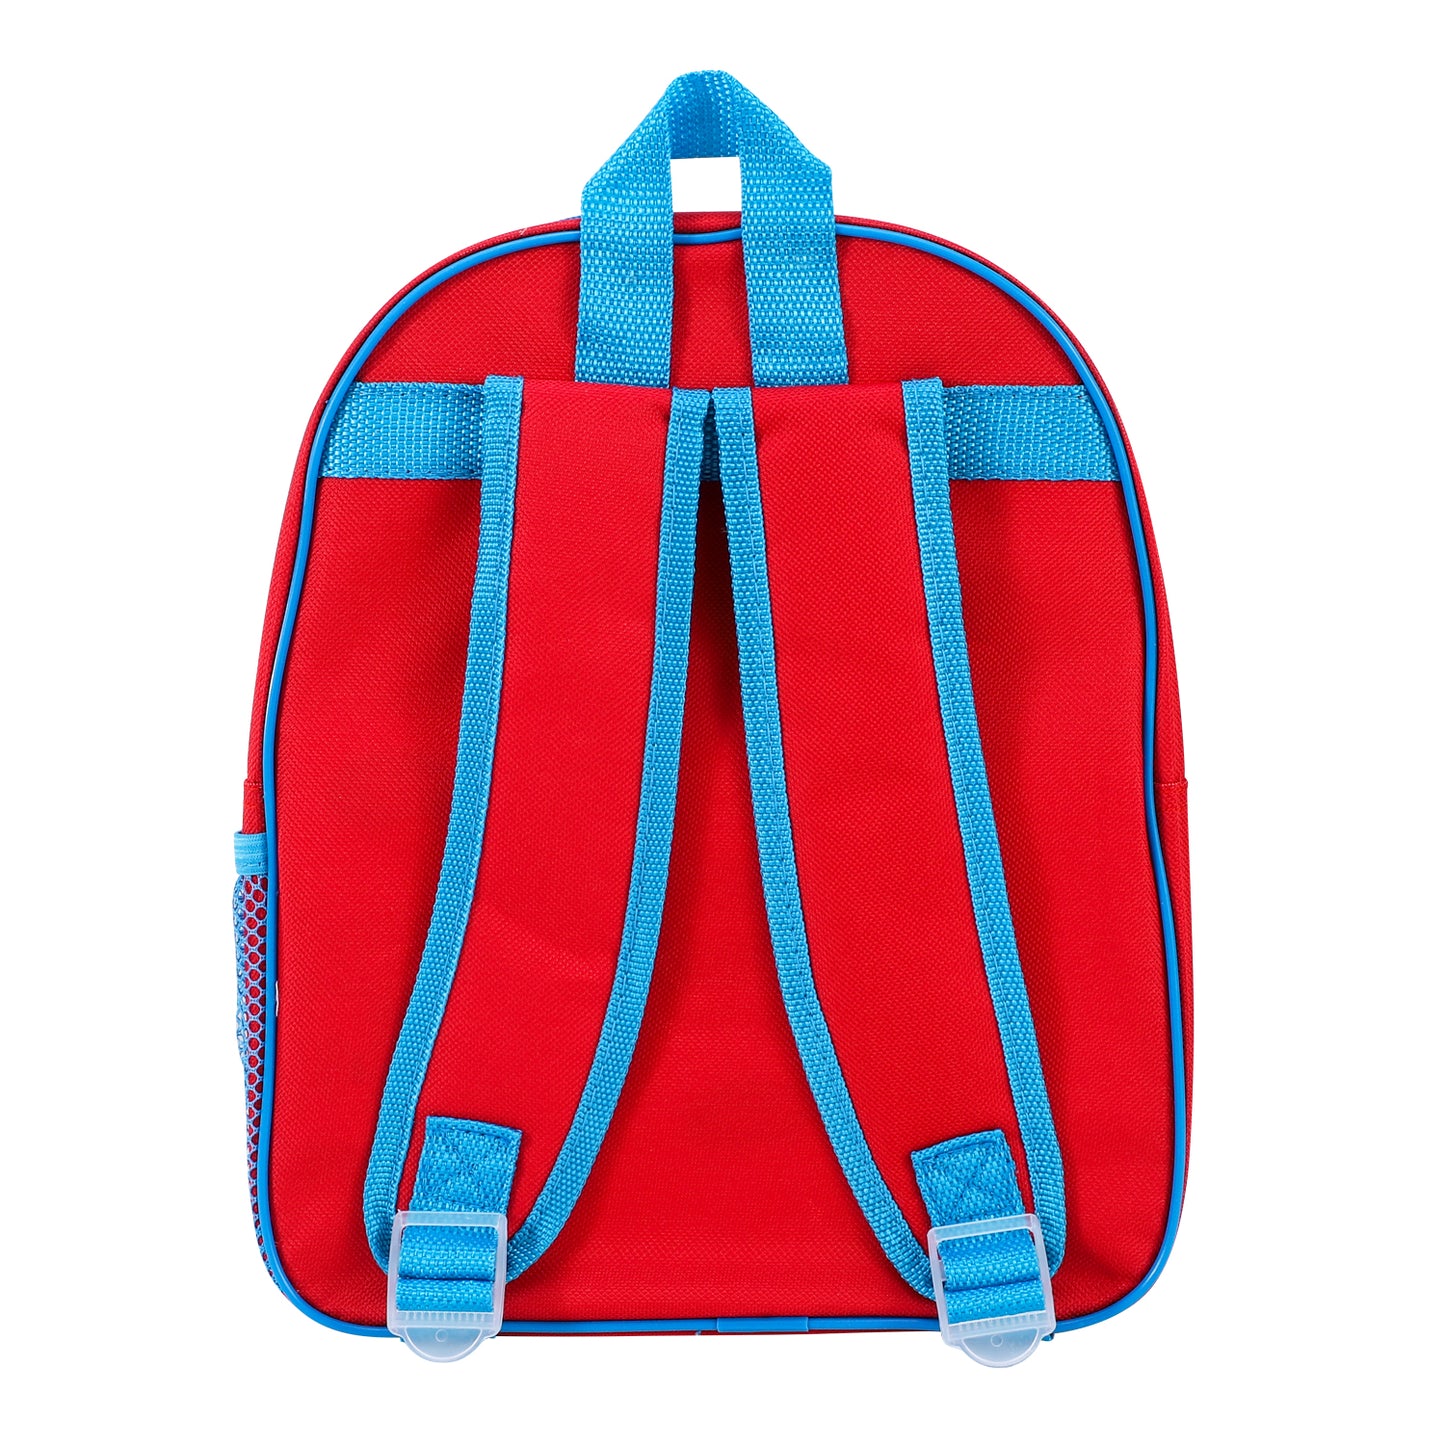 Bing & Flop Children’s Backpack School Bag for Girls or Boys